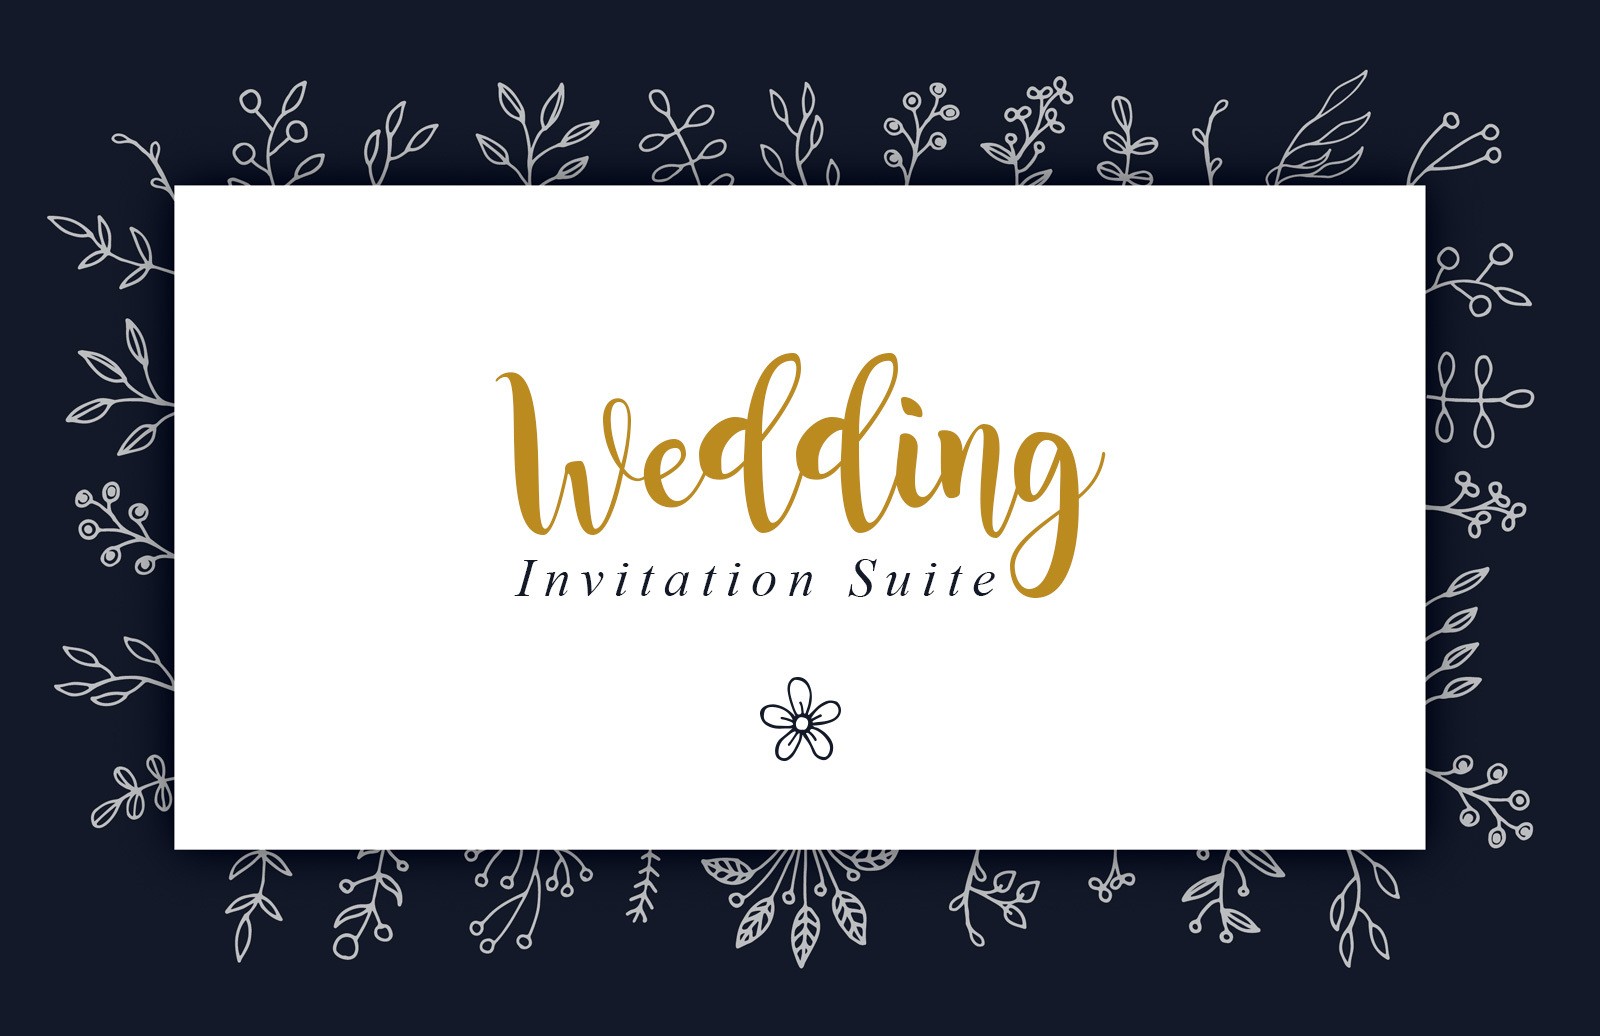 婚礼各类印刷物设计模板 Wedding Invitation Suite插图